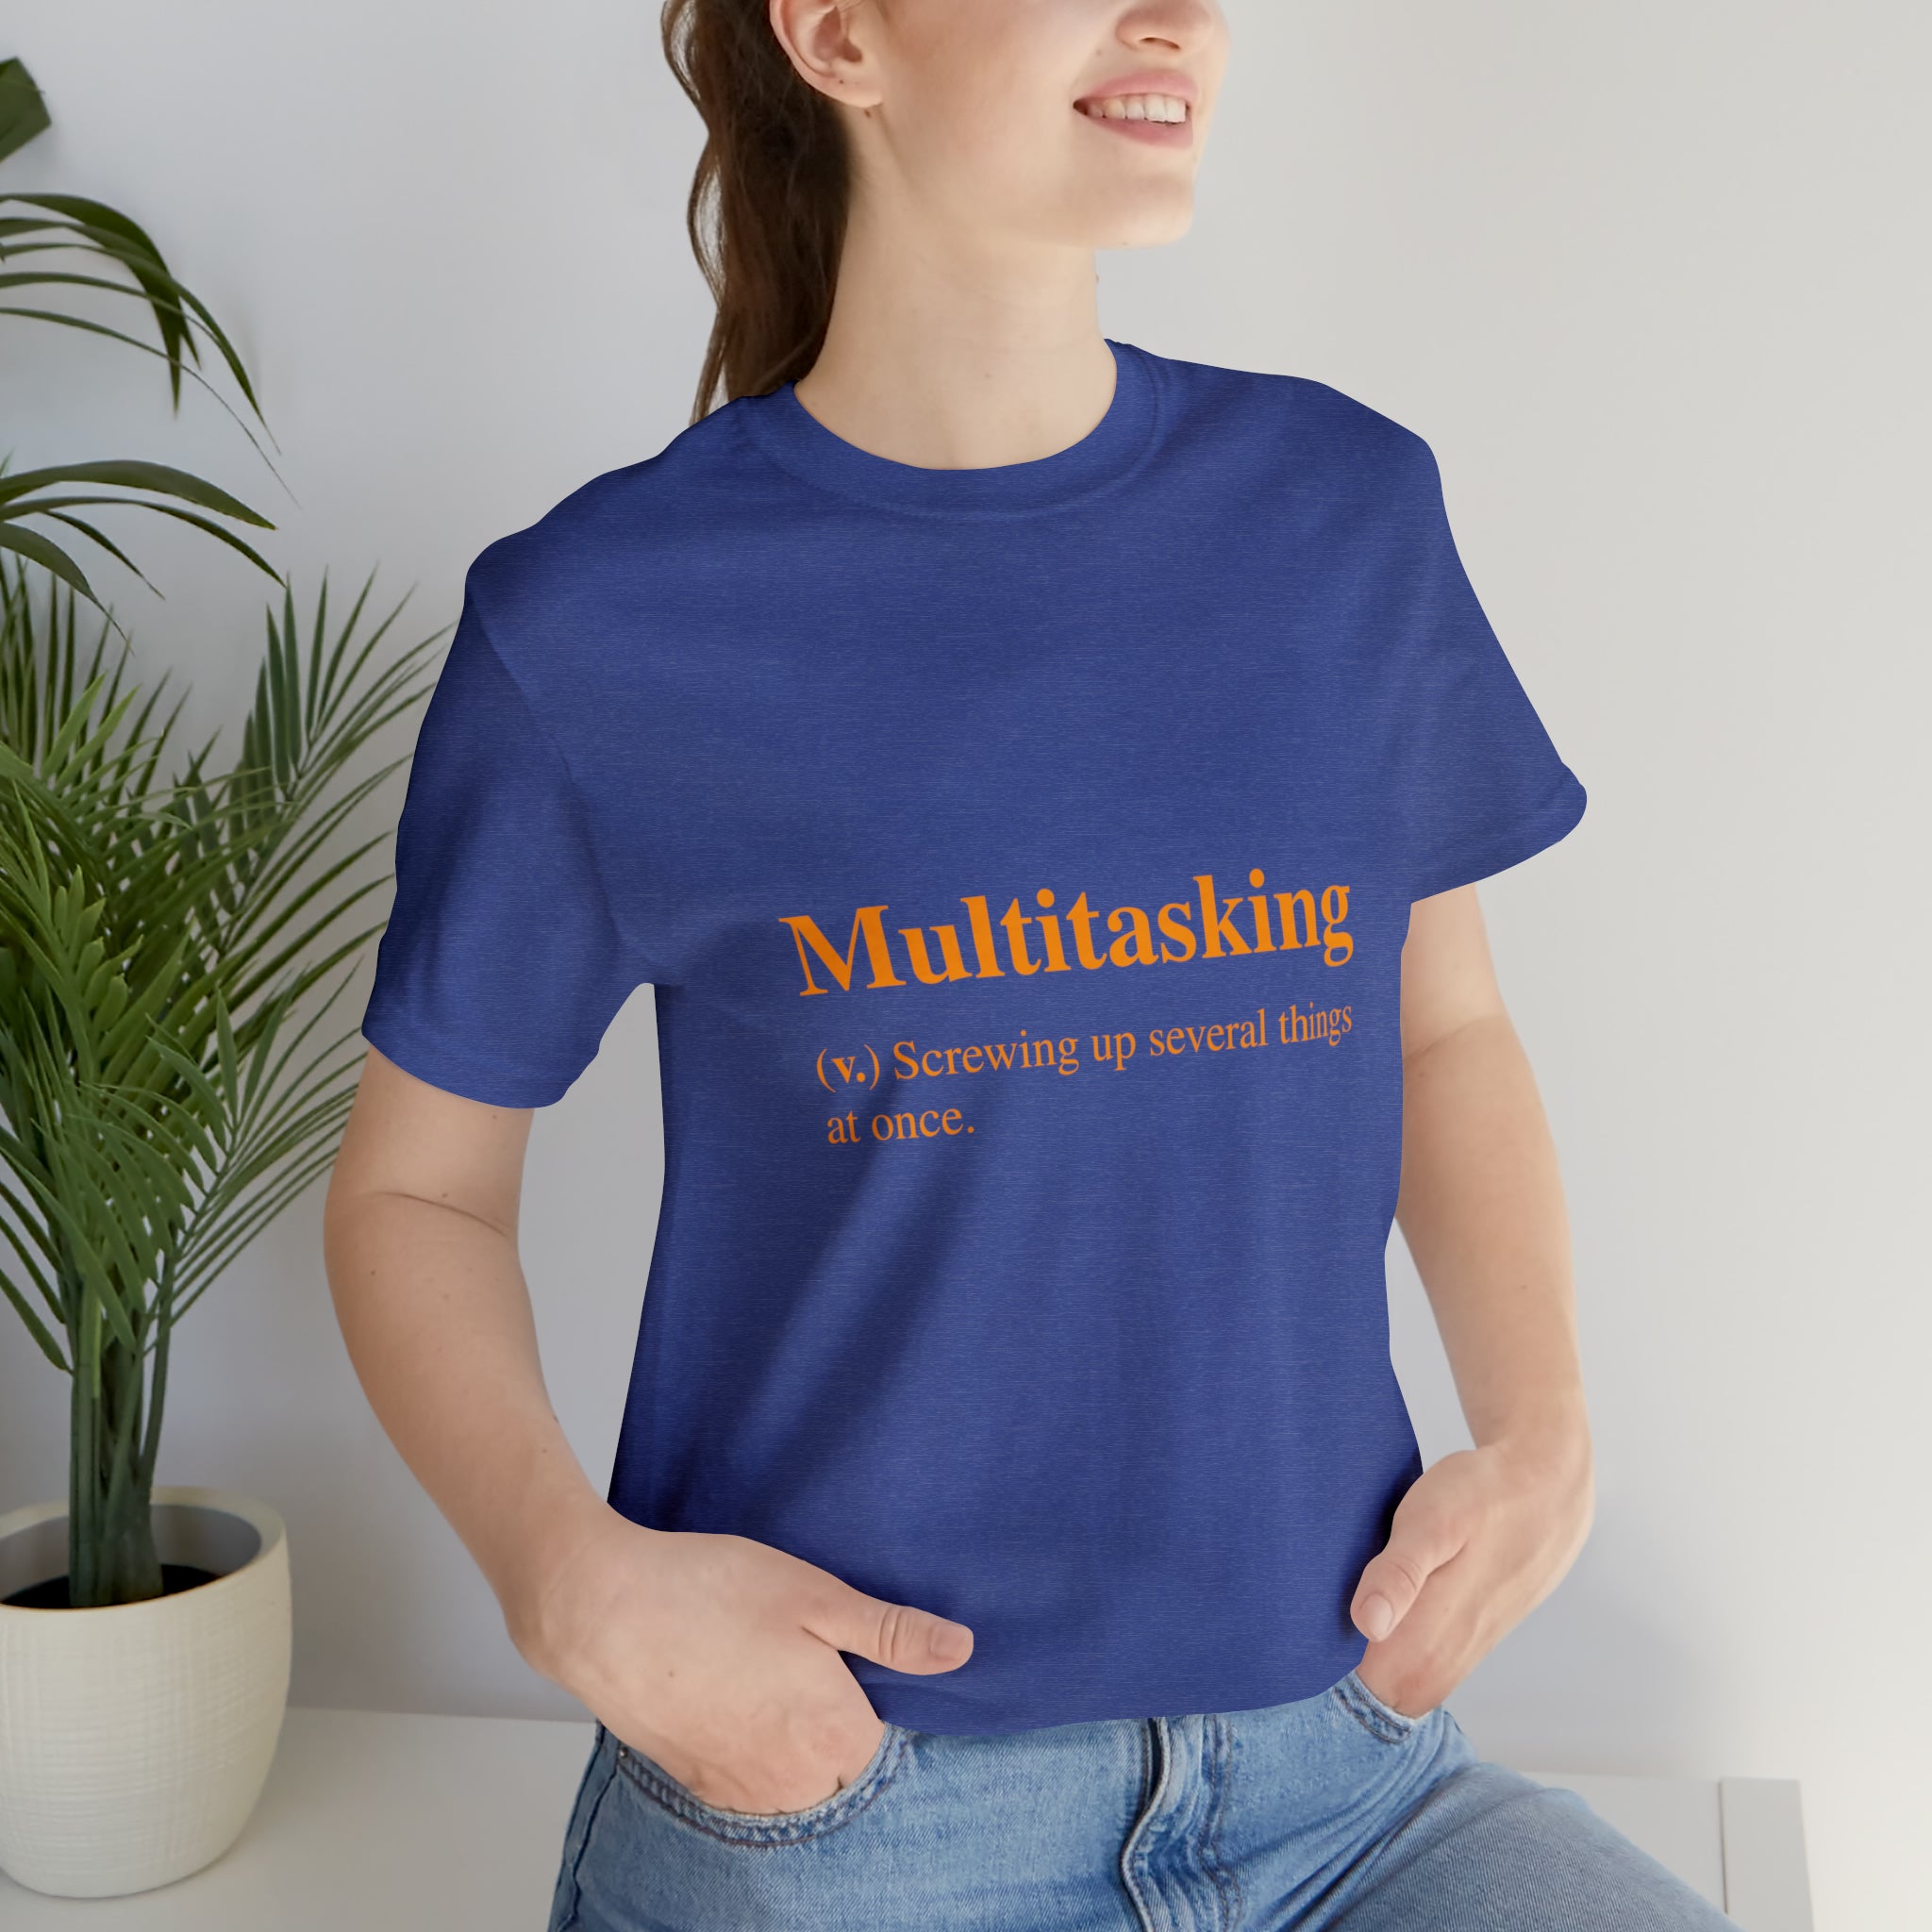 A woman wearing a Multitasking T-Shirt, showcasing her sense of fashion.